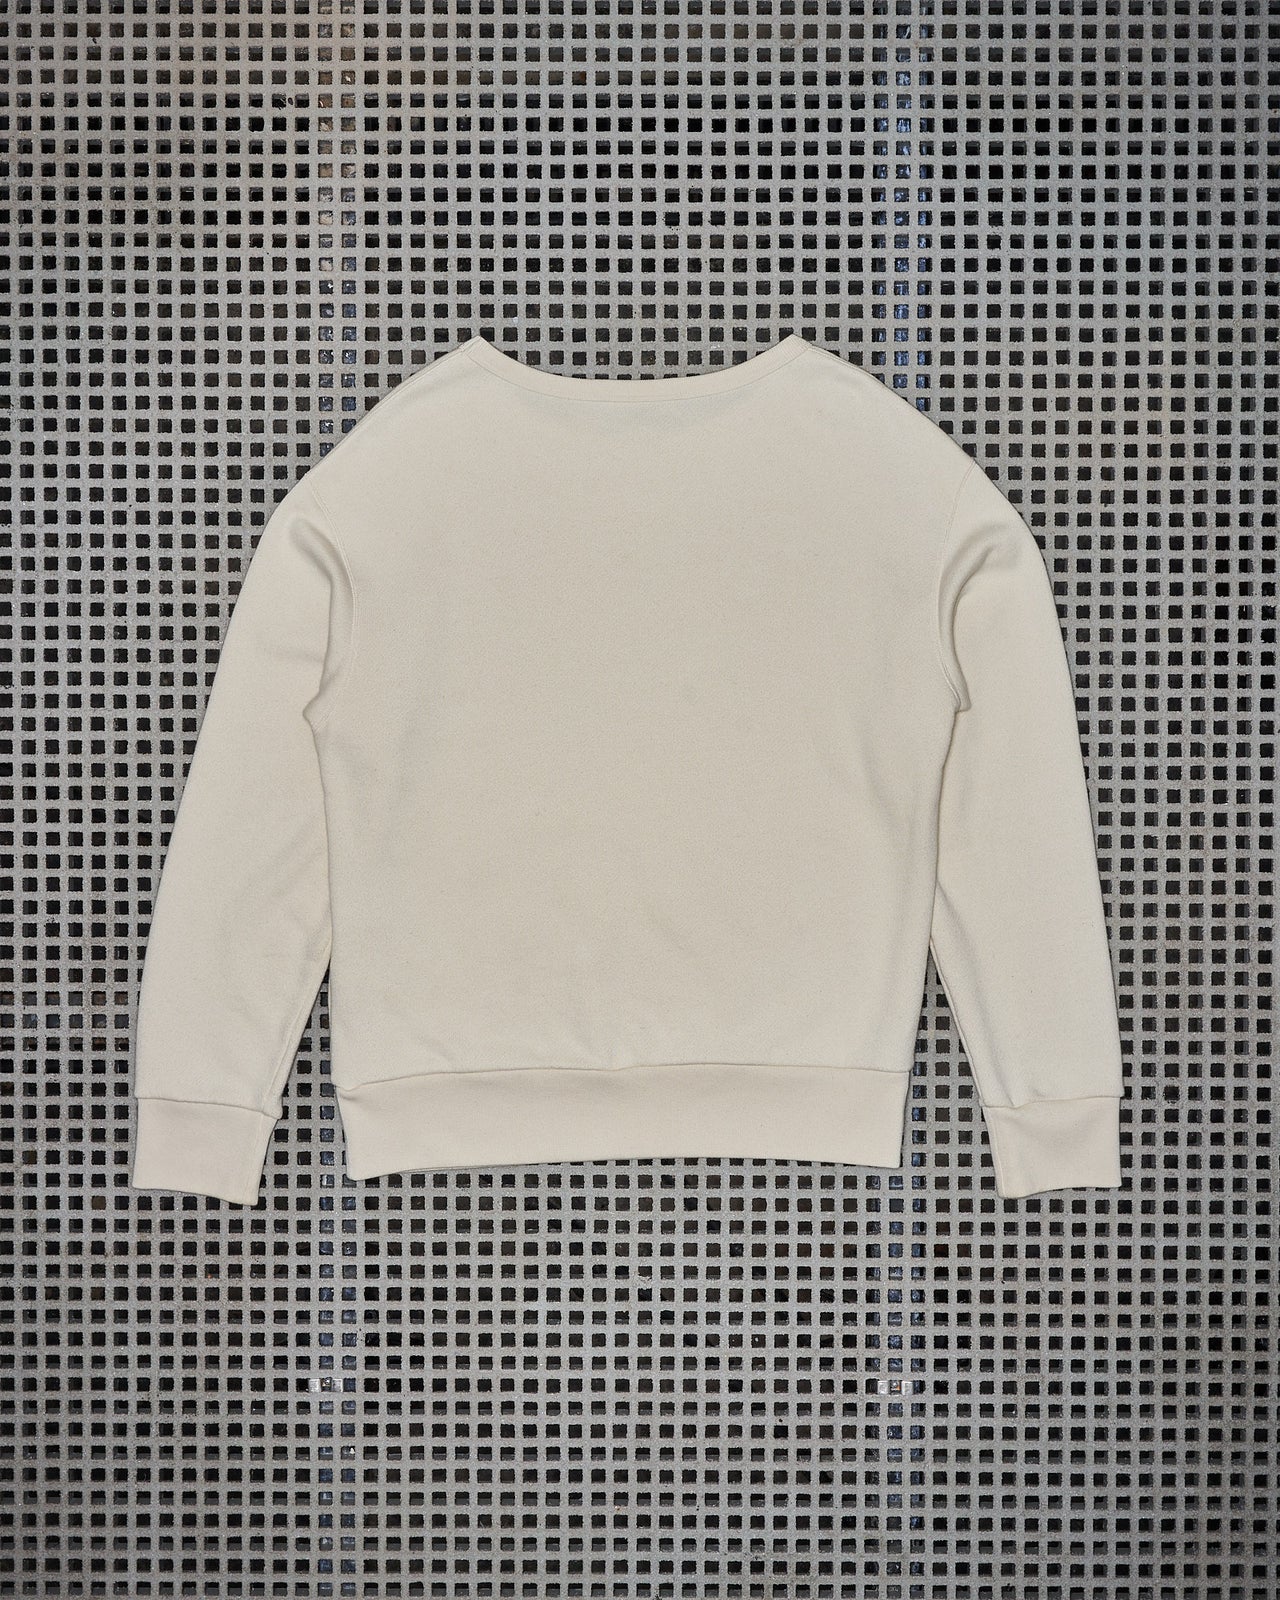 2019 Winged jockey cotton sweatshirt